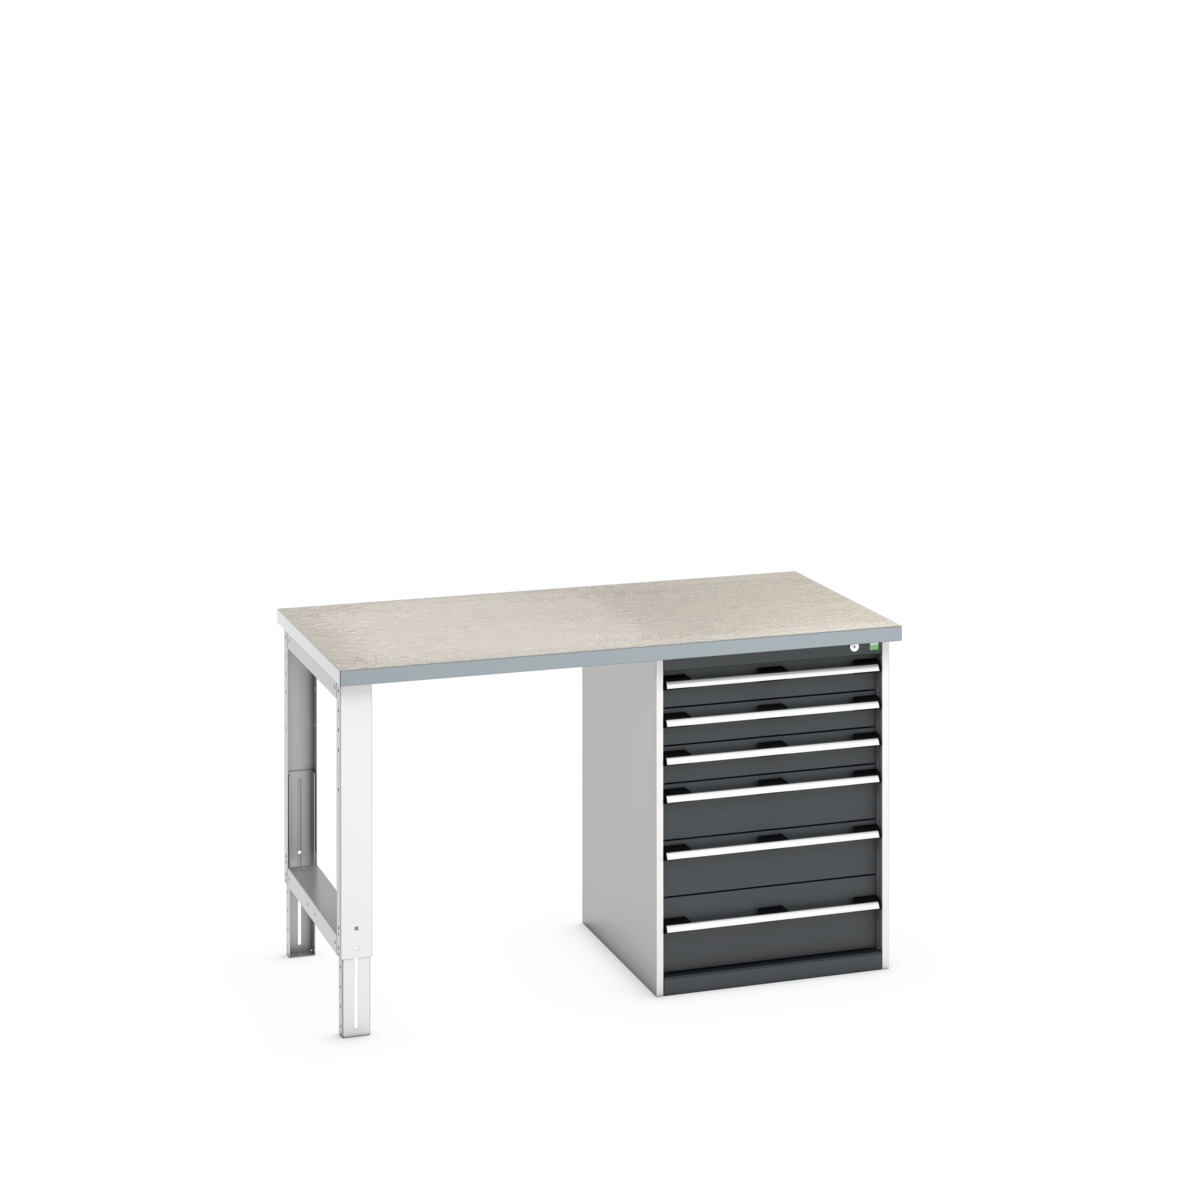 41004118. - cubio pedestal bench (lino)